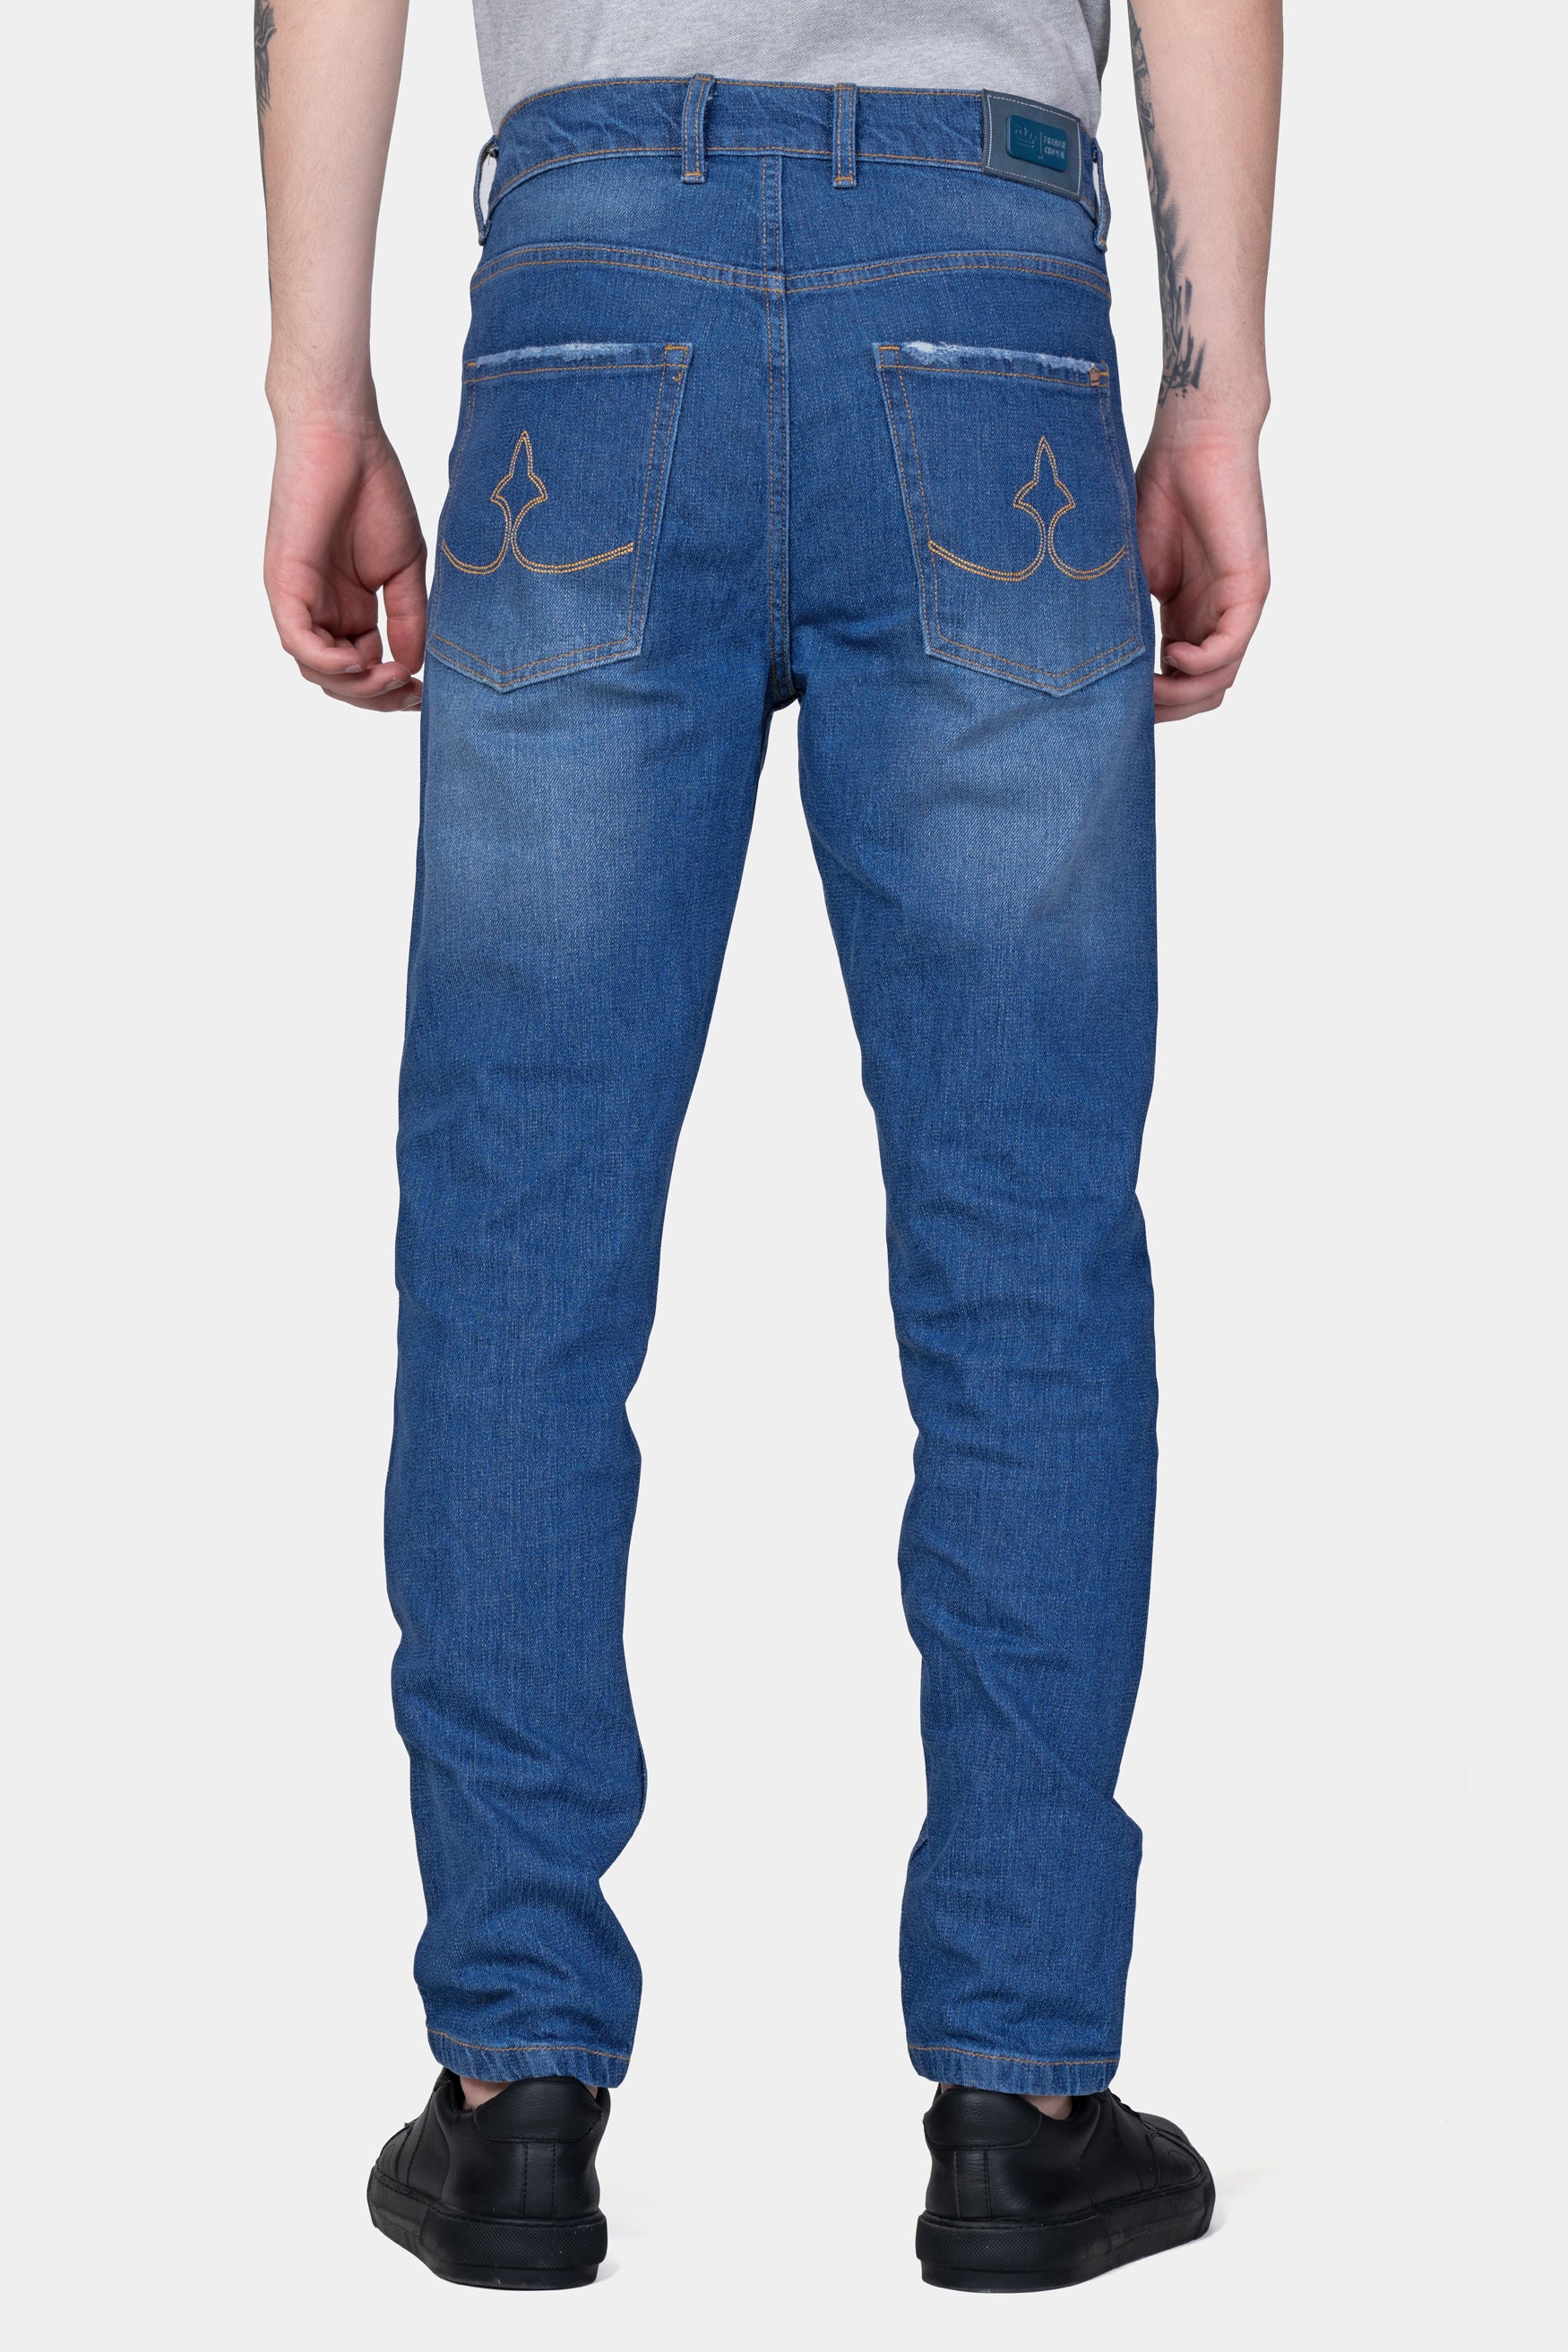 J. CREW Toothpick Skinny Jeans Cobalt Blue Slim Leg Denim Colored Sz 27  #77088 | eBay